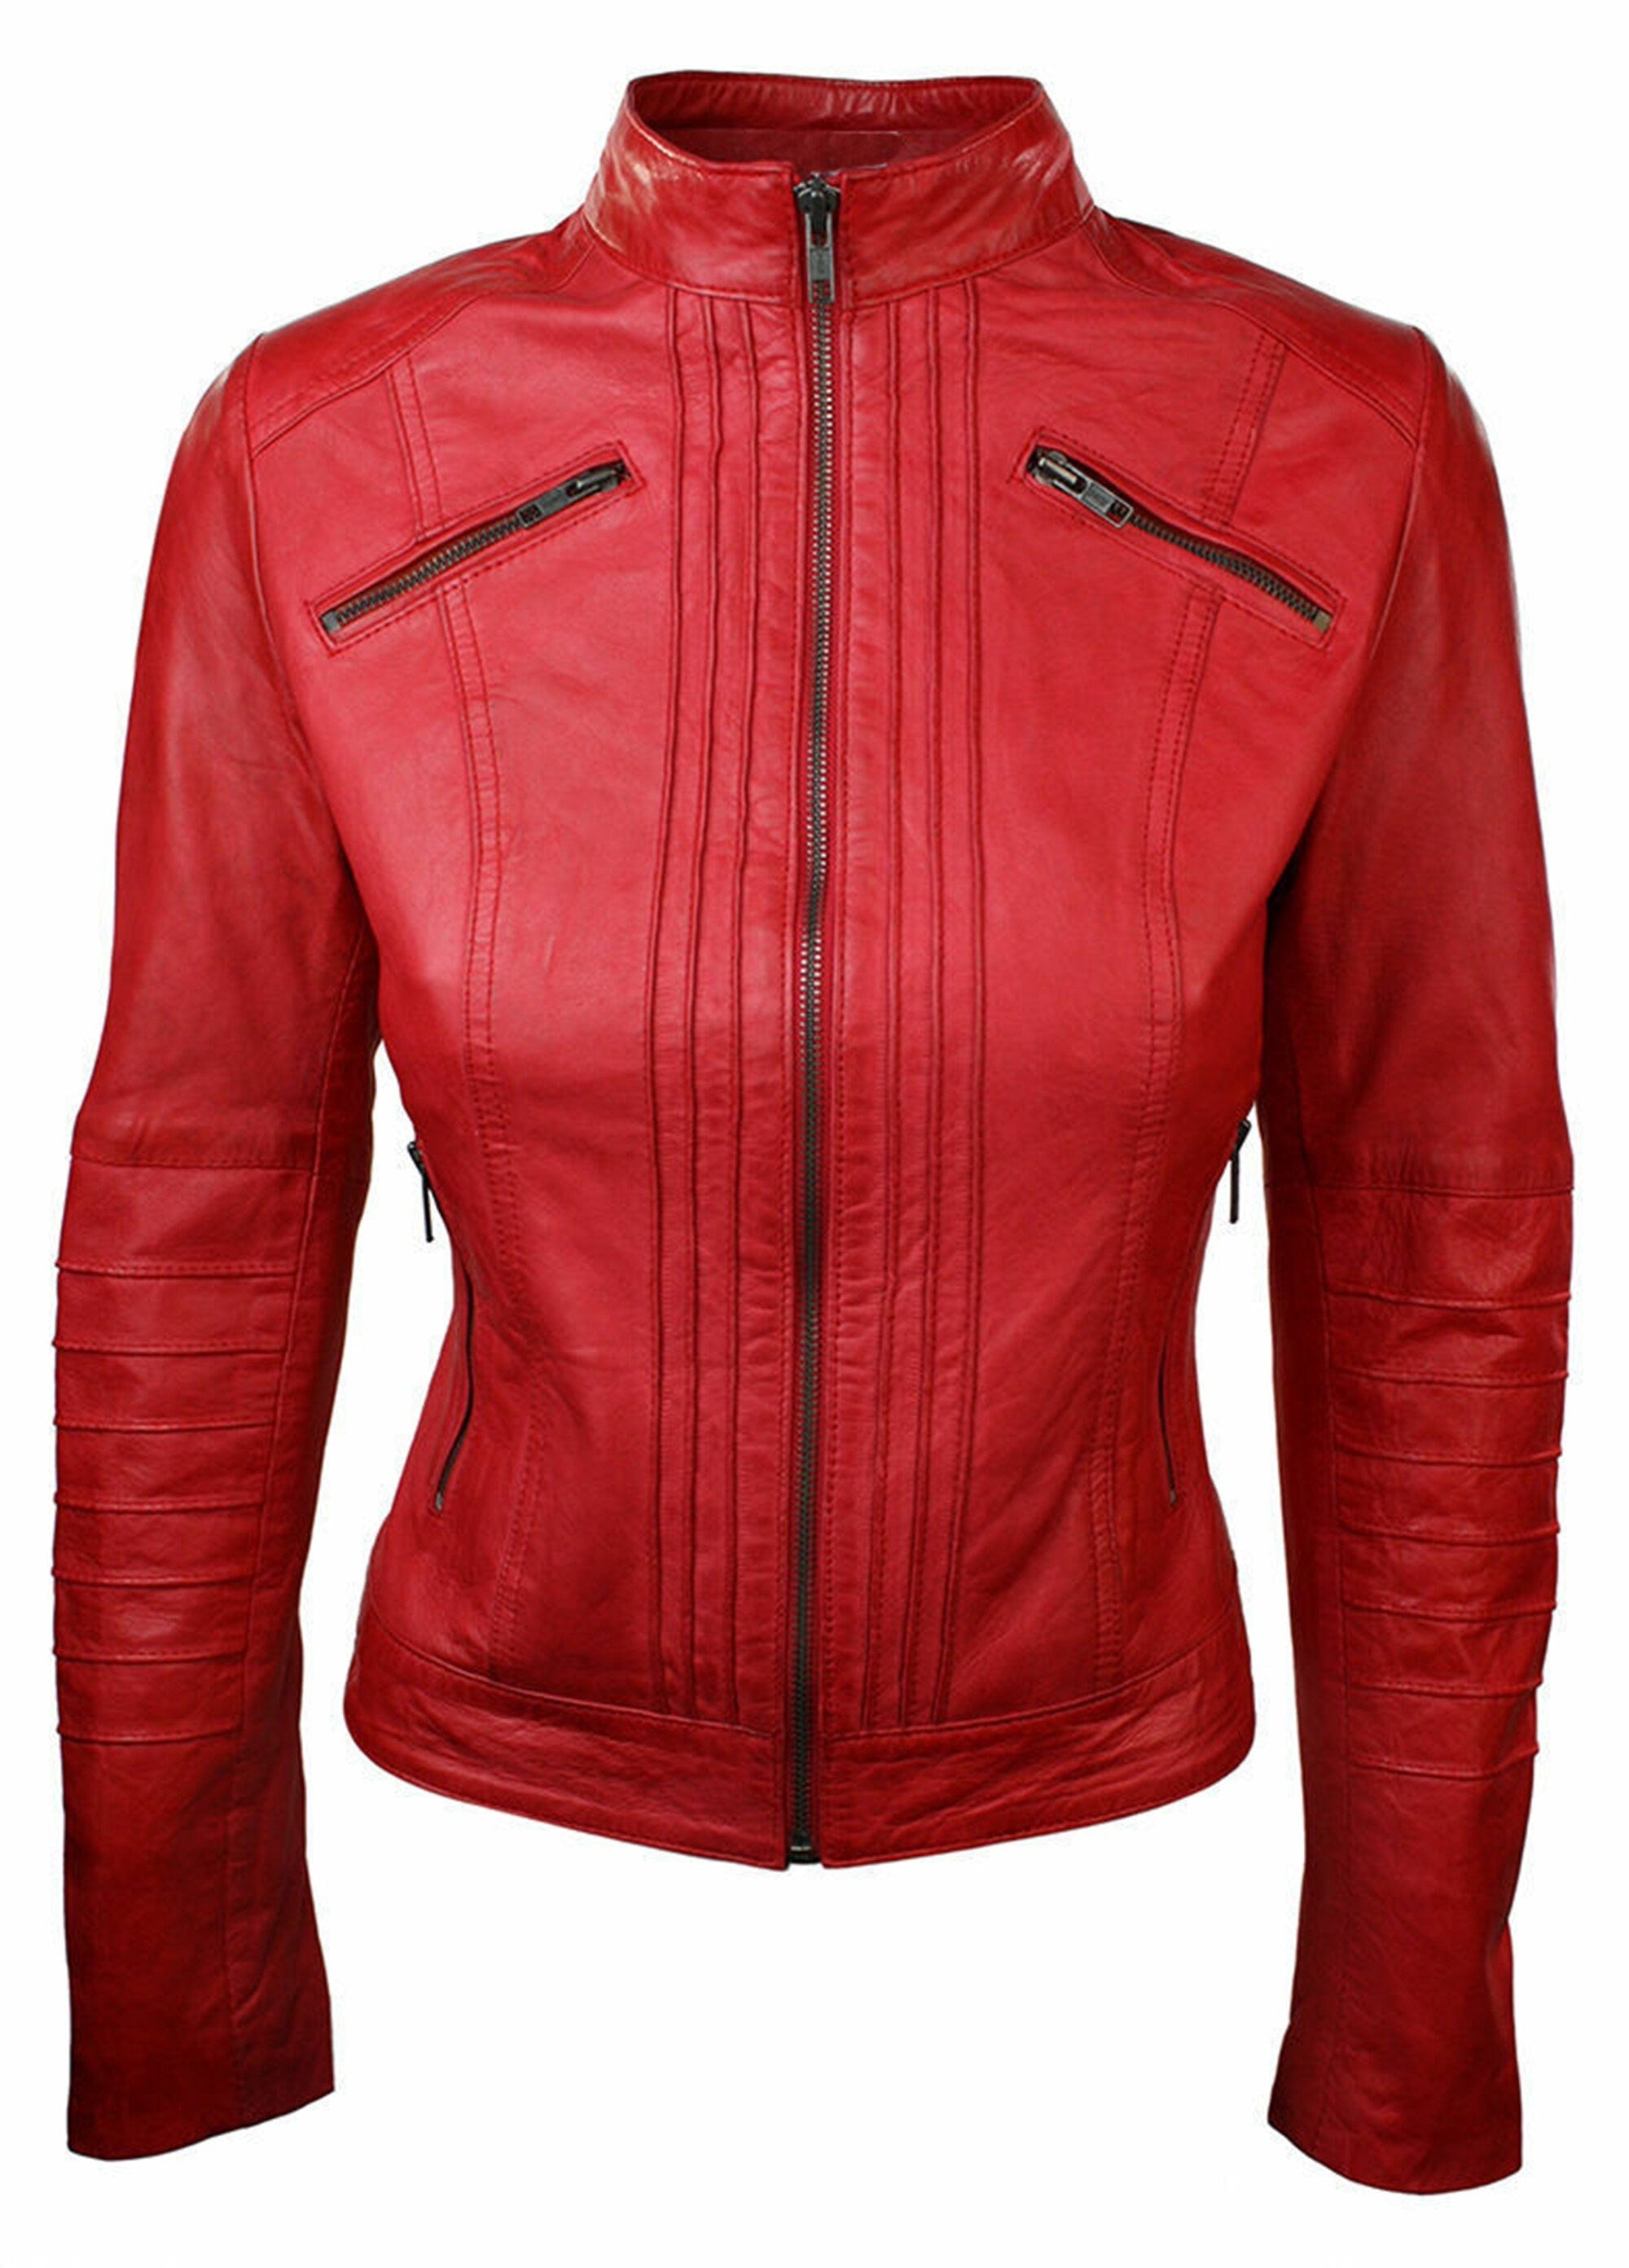 Vintage Red Leather Jacket Women